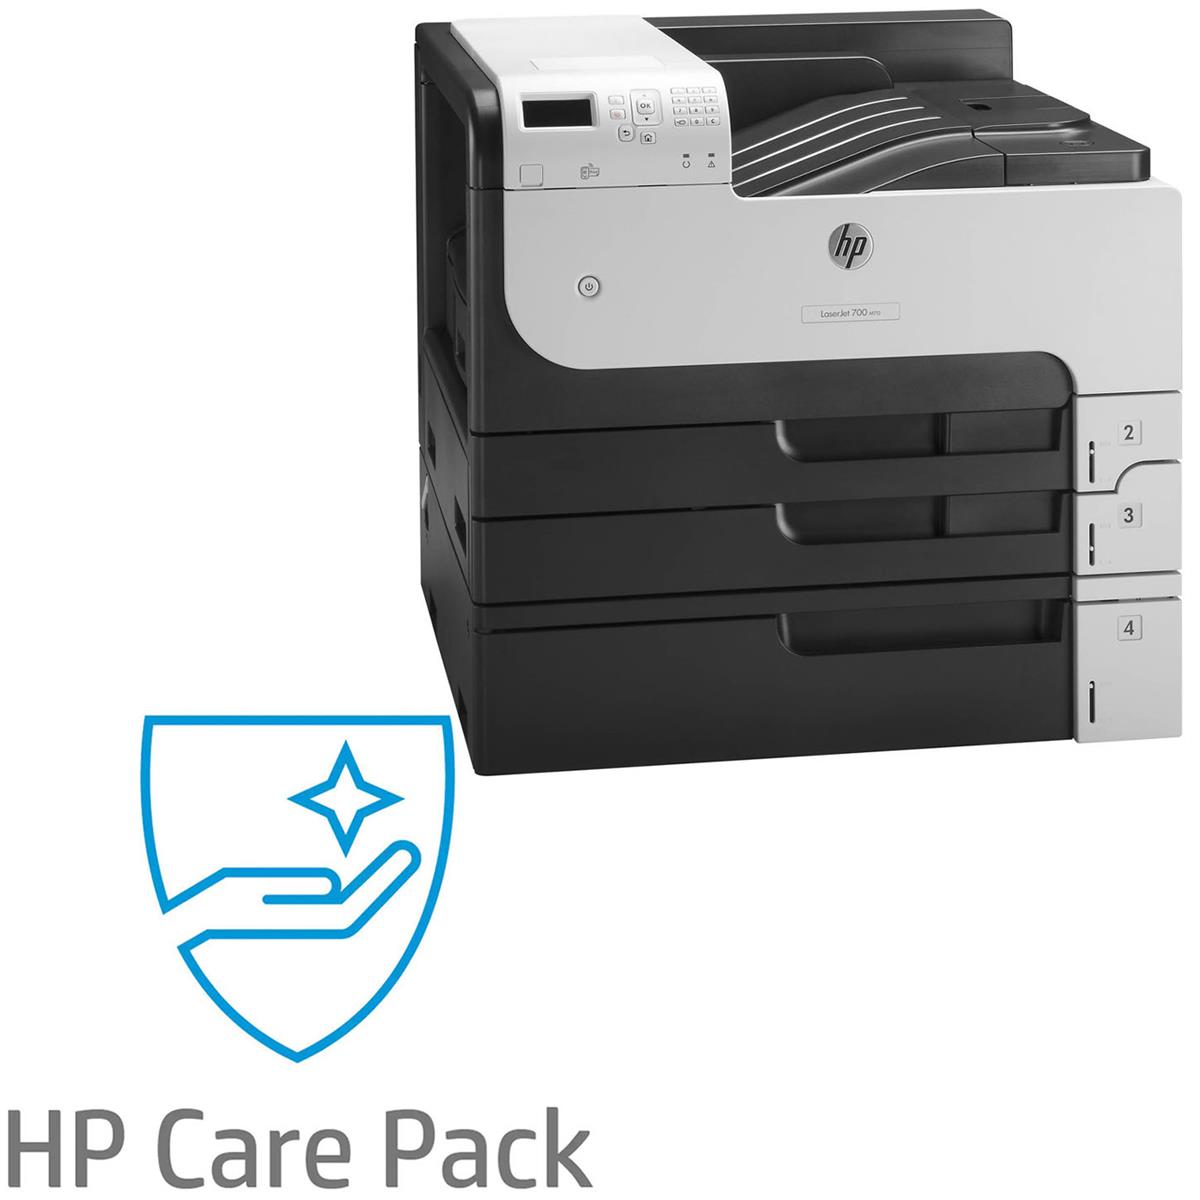 

HP LaserJet Enterprise 700 M712xh Monochrome Printer with HP 4 Year Support